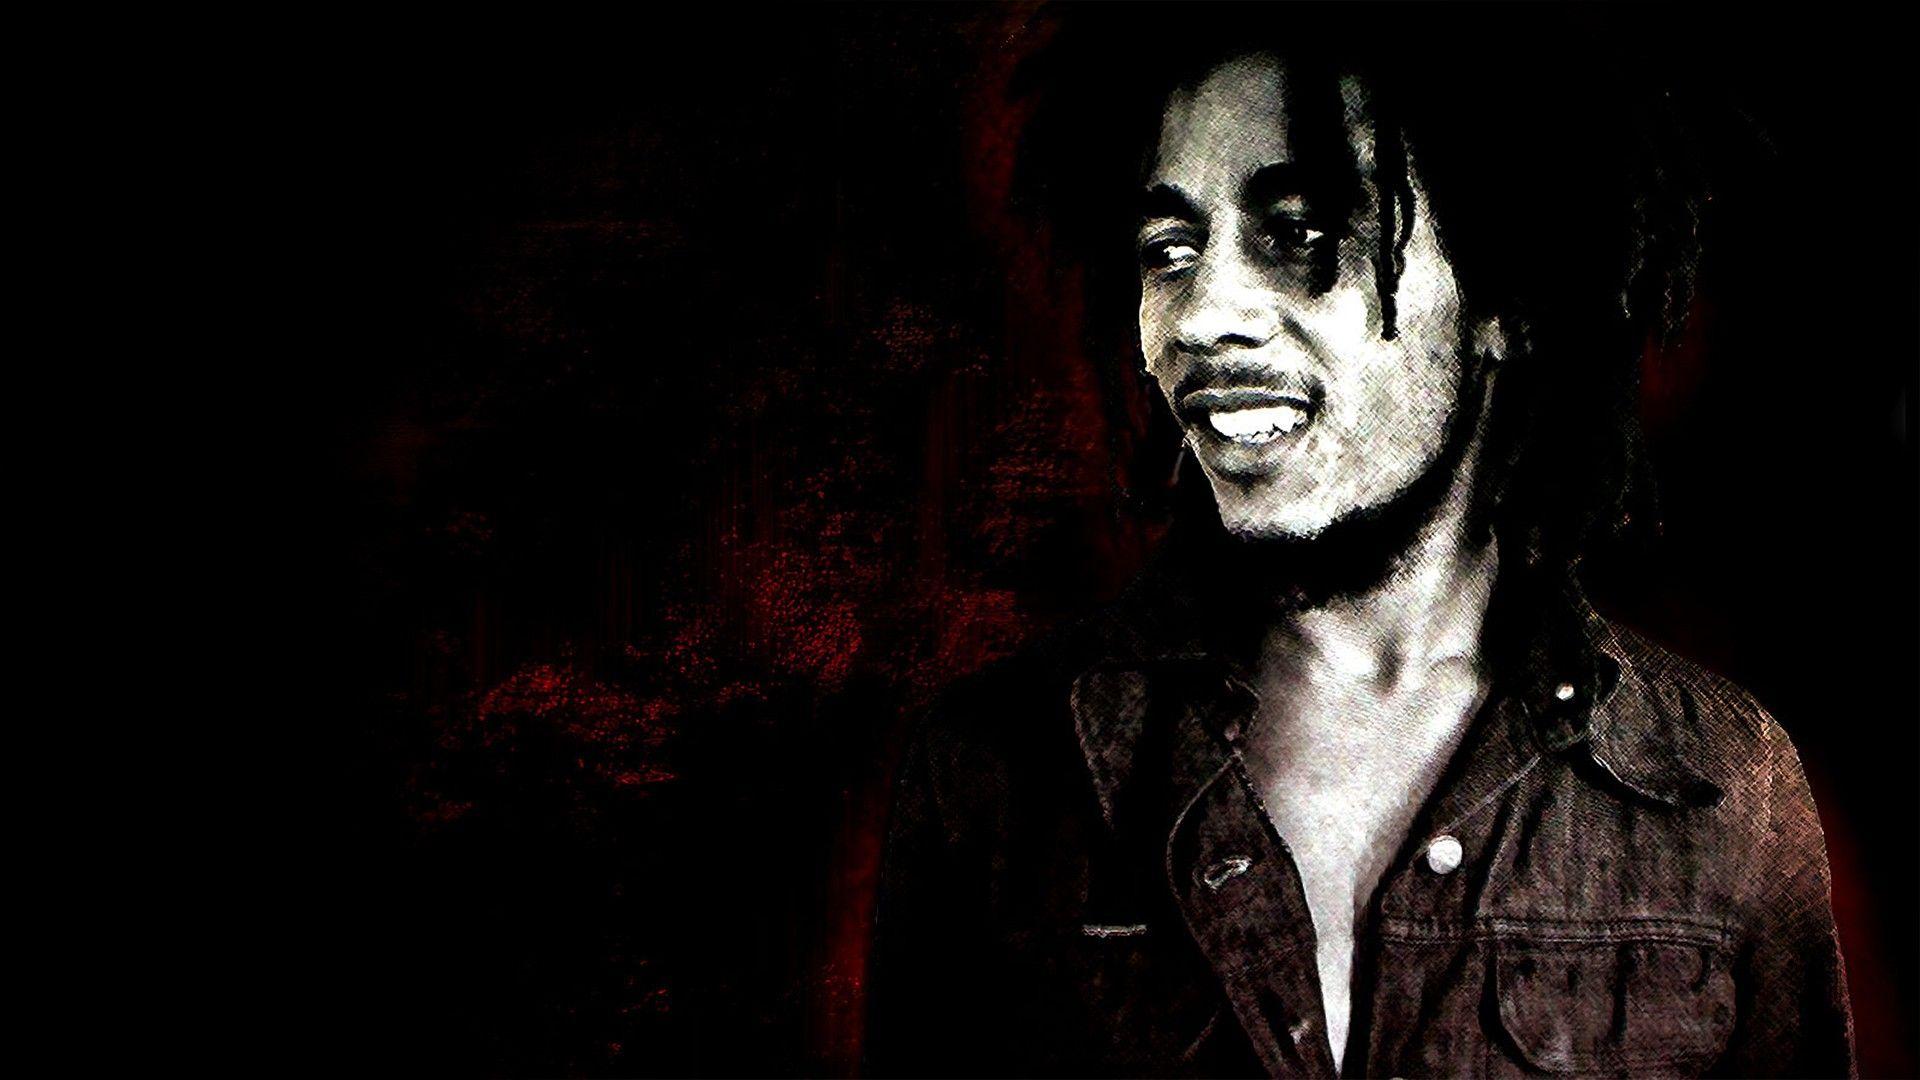 Bob Marley Wallpaper 7527 1920x1080 px